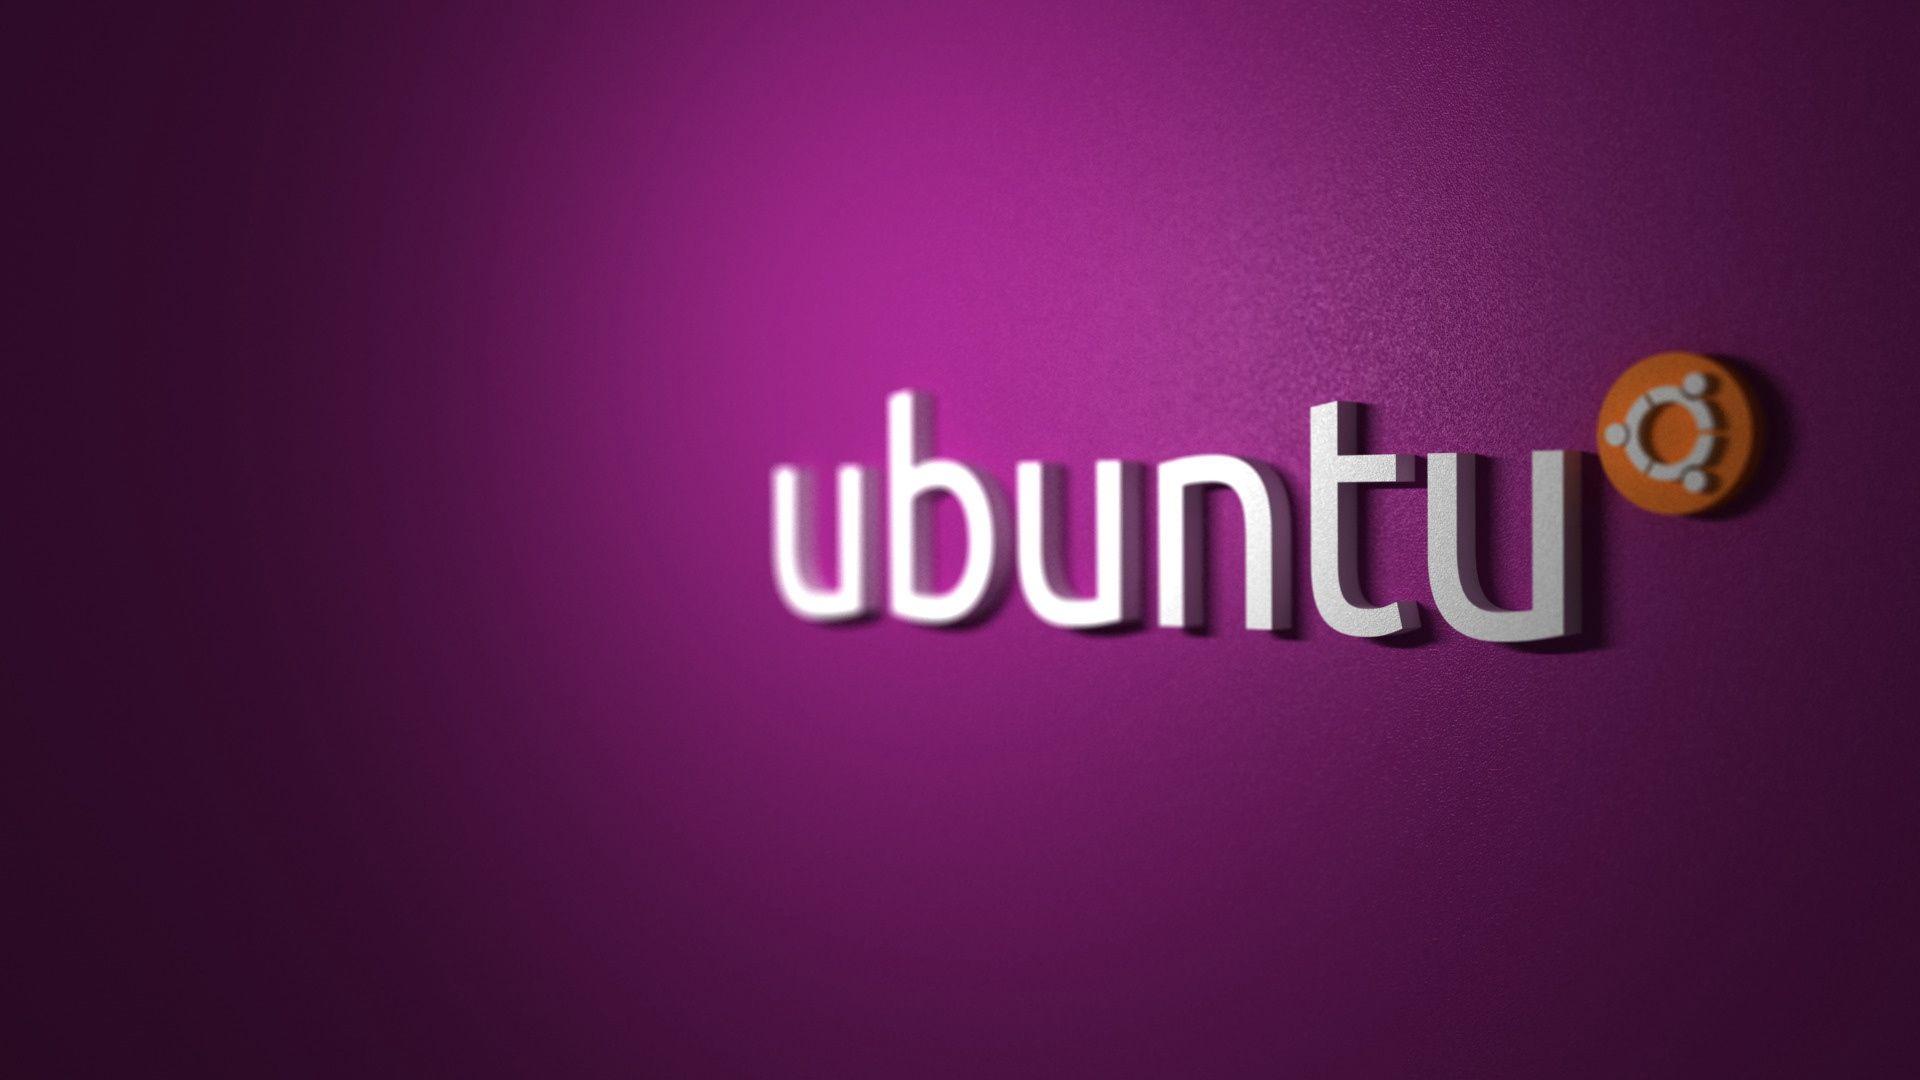 Linux Ubuntu Logo - Download wallpaper 1920x1080 linux, ubuntu, logo, brand hd background